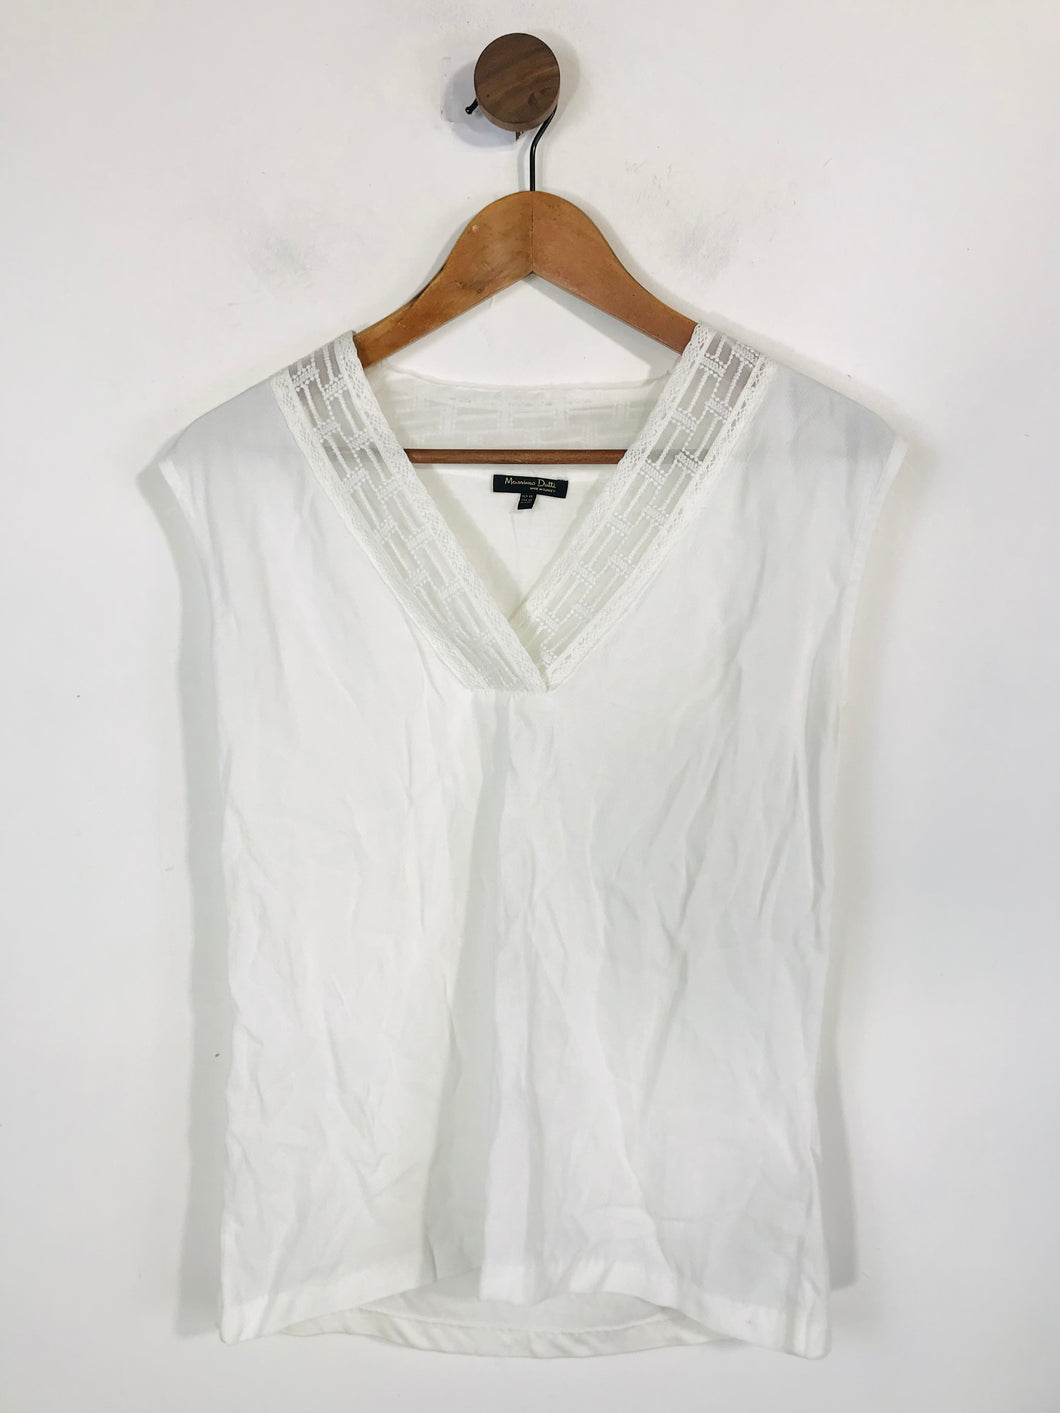 Massimo Dutti Women's Embroidered V-Neck Tank Top | XS UK6-8 | White